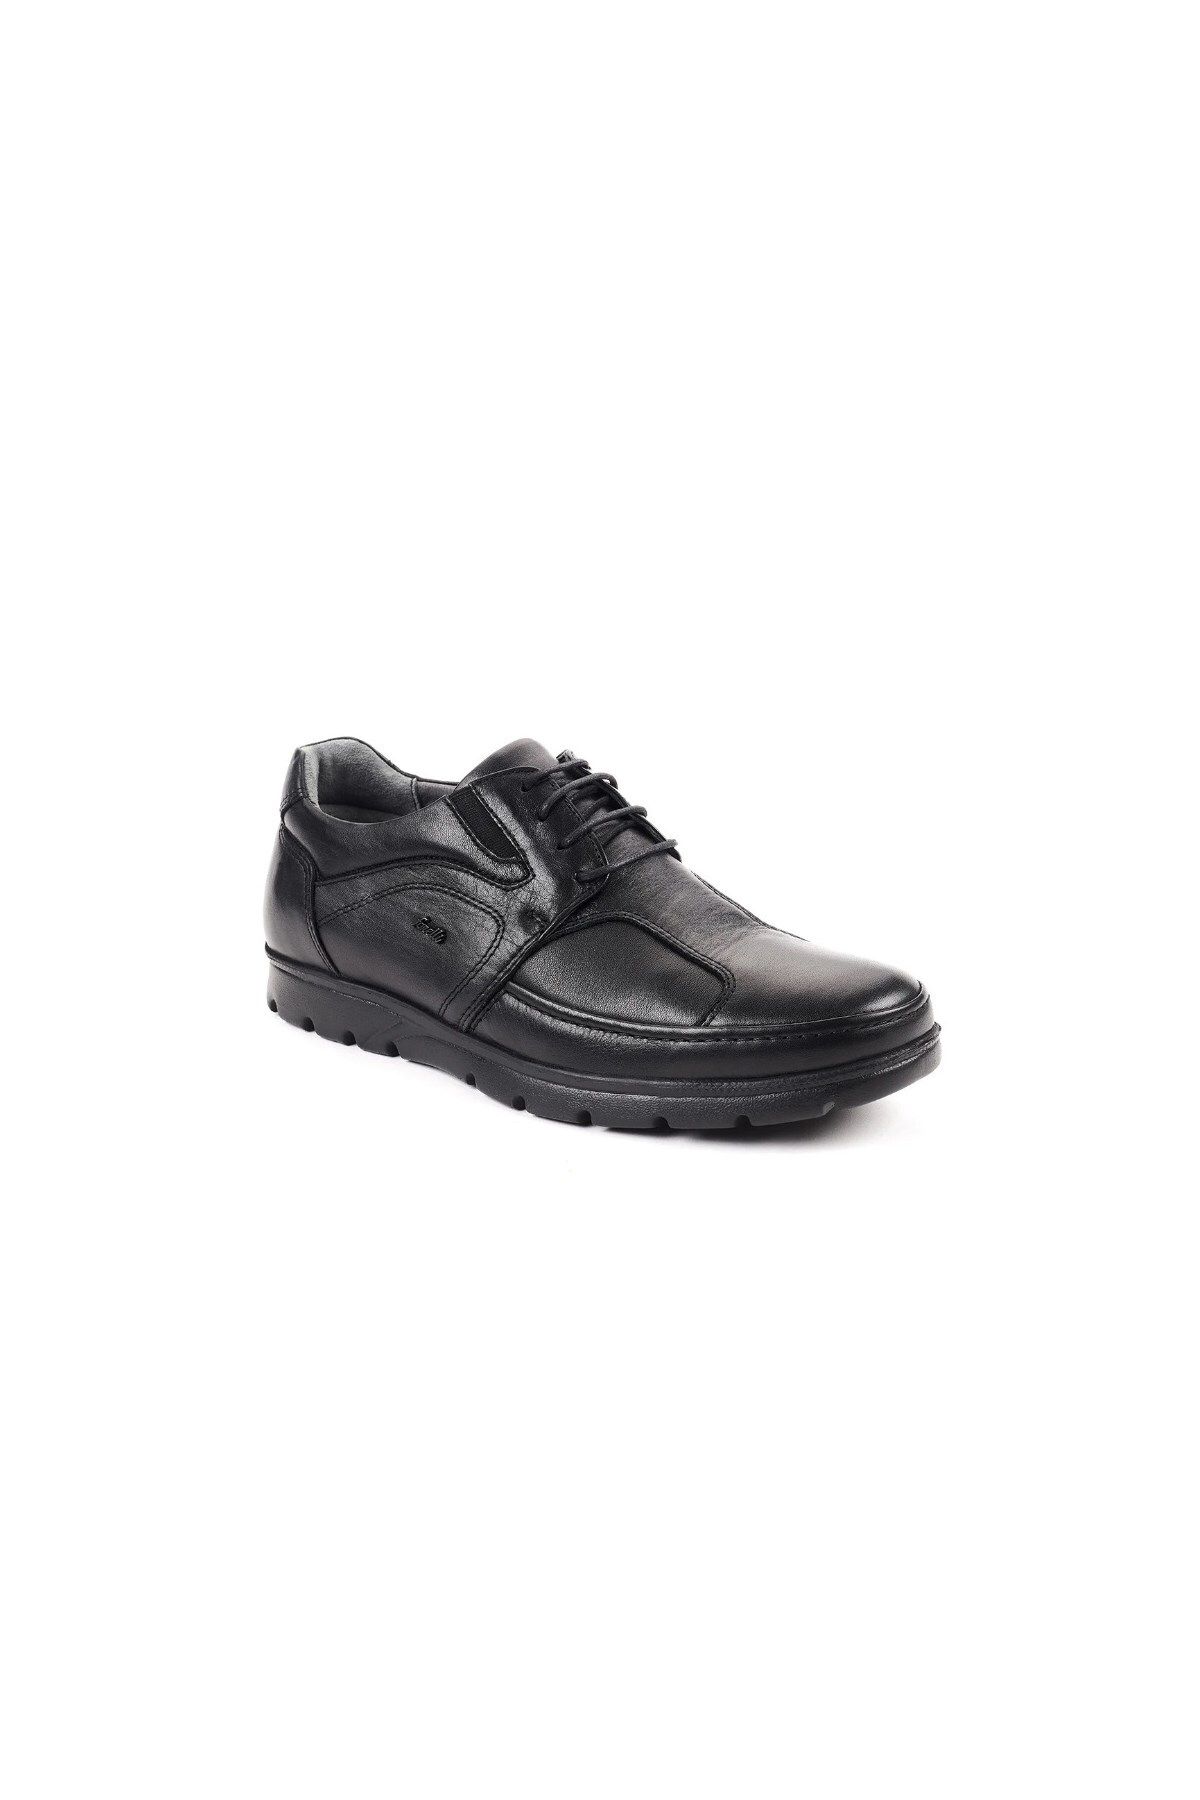 Forelli 32605 - Broks Comfort Erkek Ayakkabı Siyah